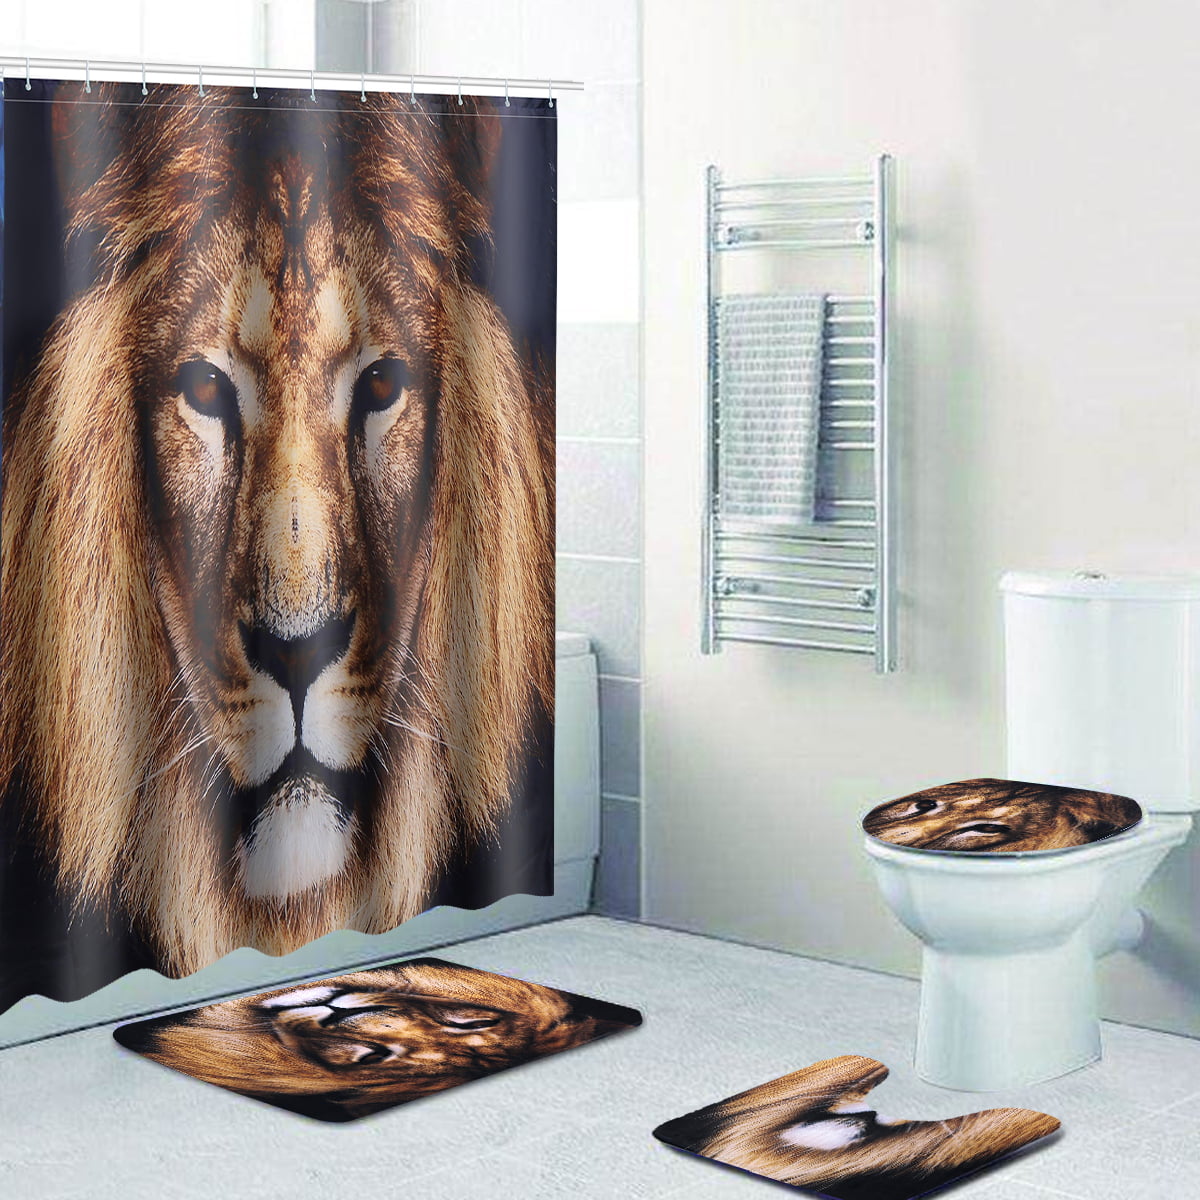 Flame Lion Waterproof Fabric Shower Curtain Liner Bathroom Decor Doormat Rugs 